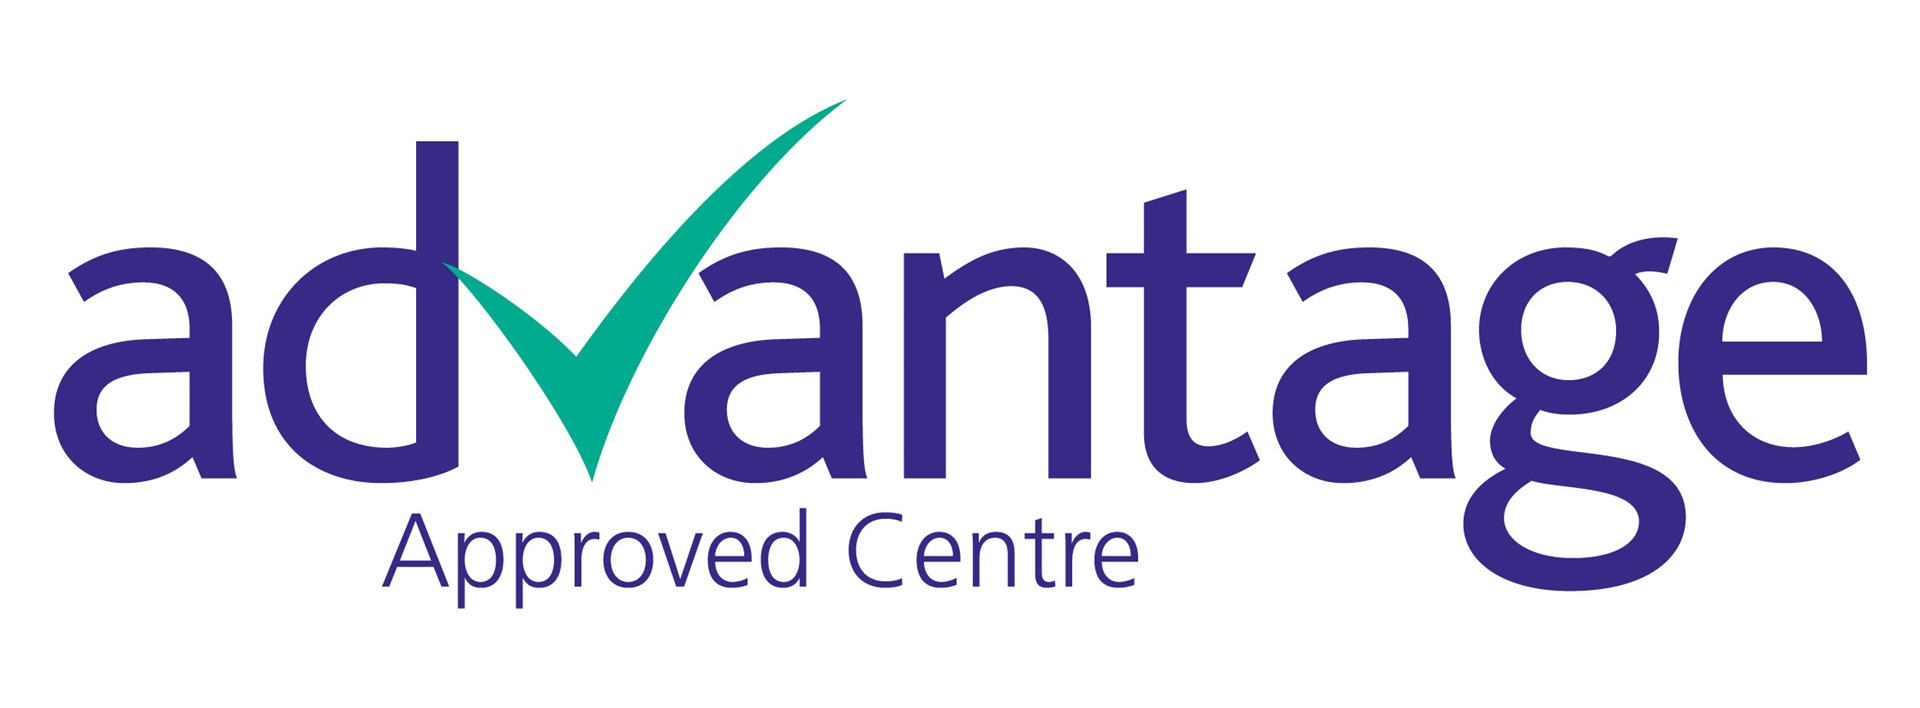 advantage approved centre logo